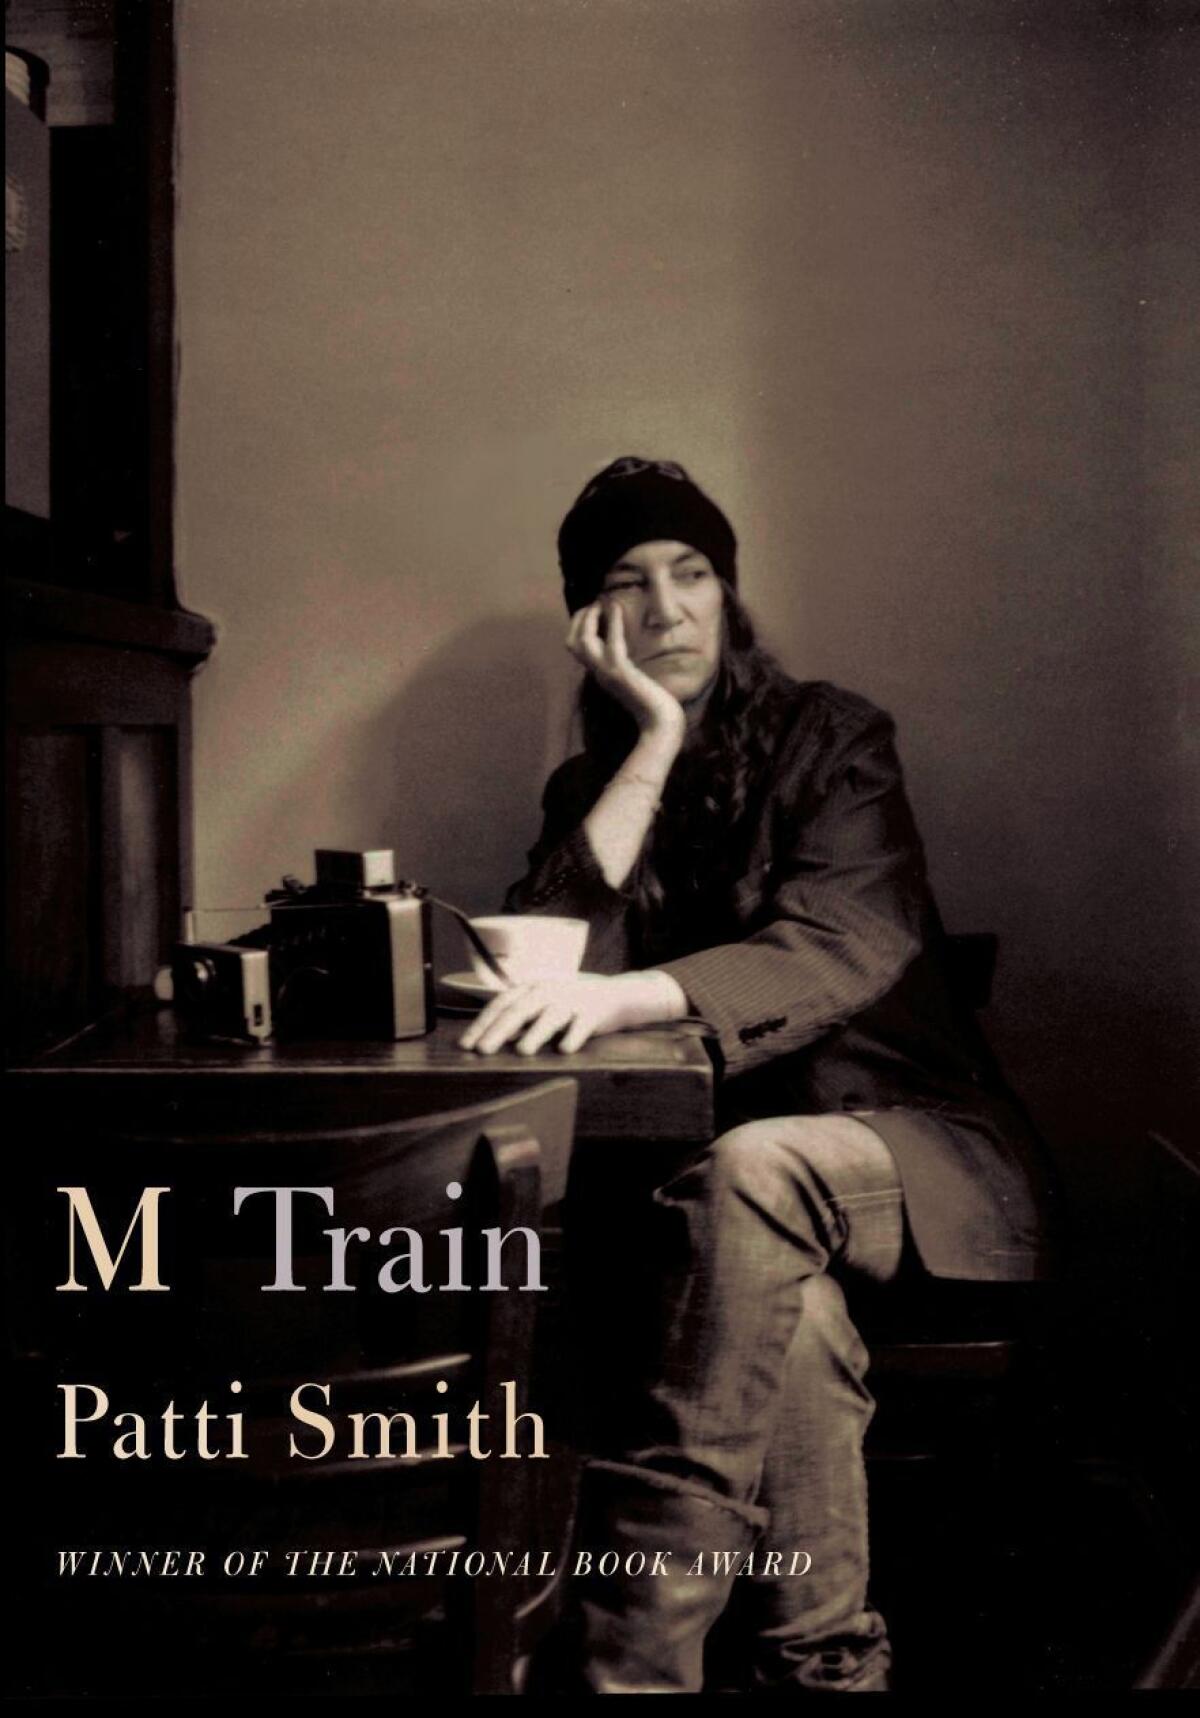 "M Train" by Patti Smith